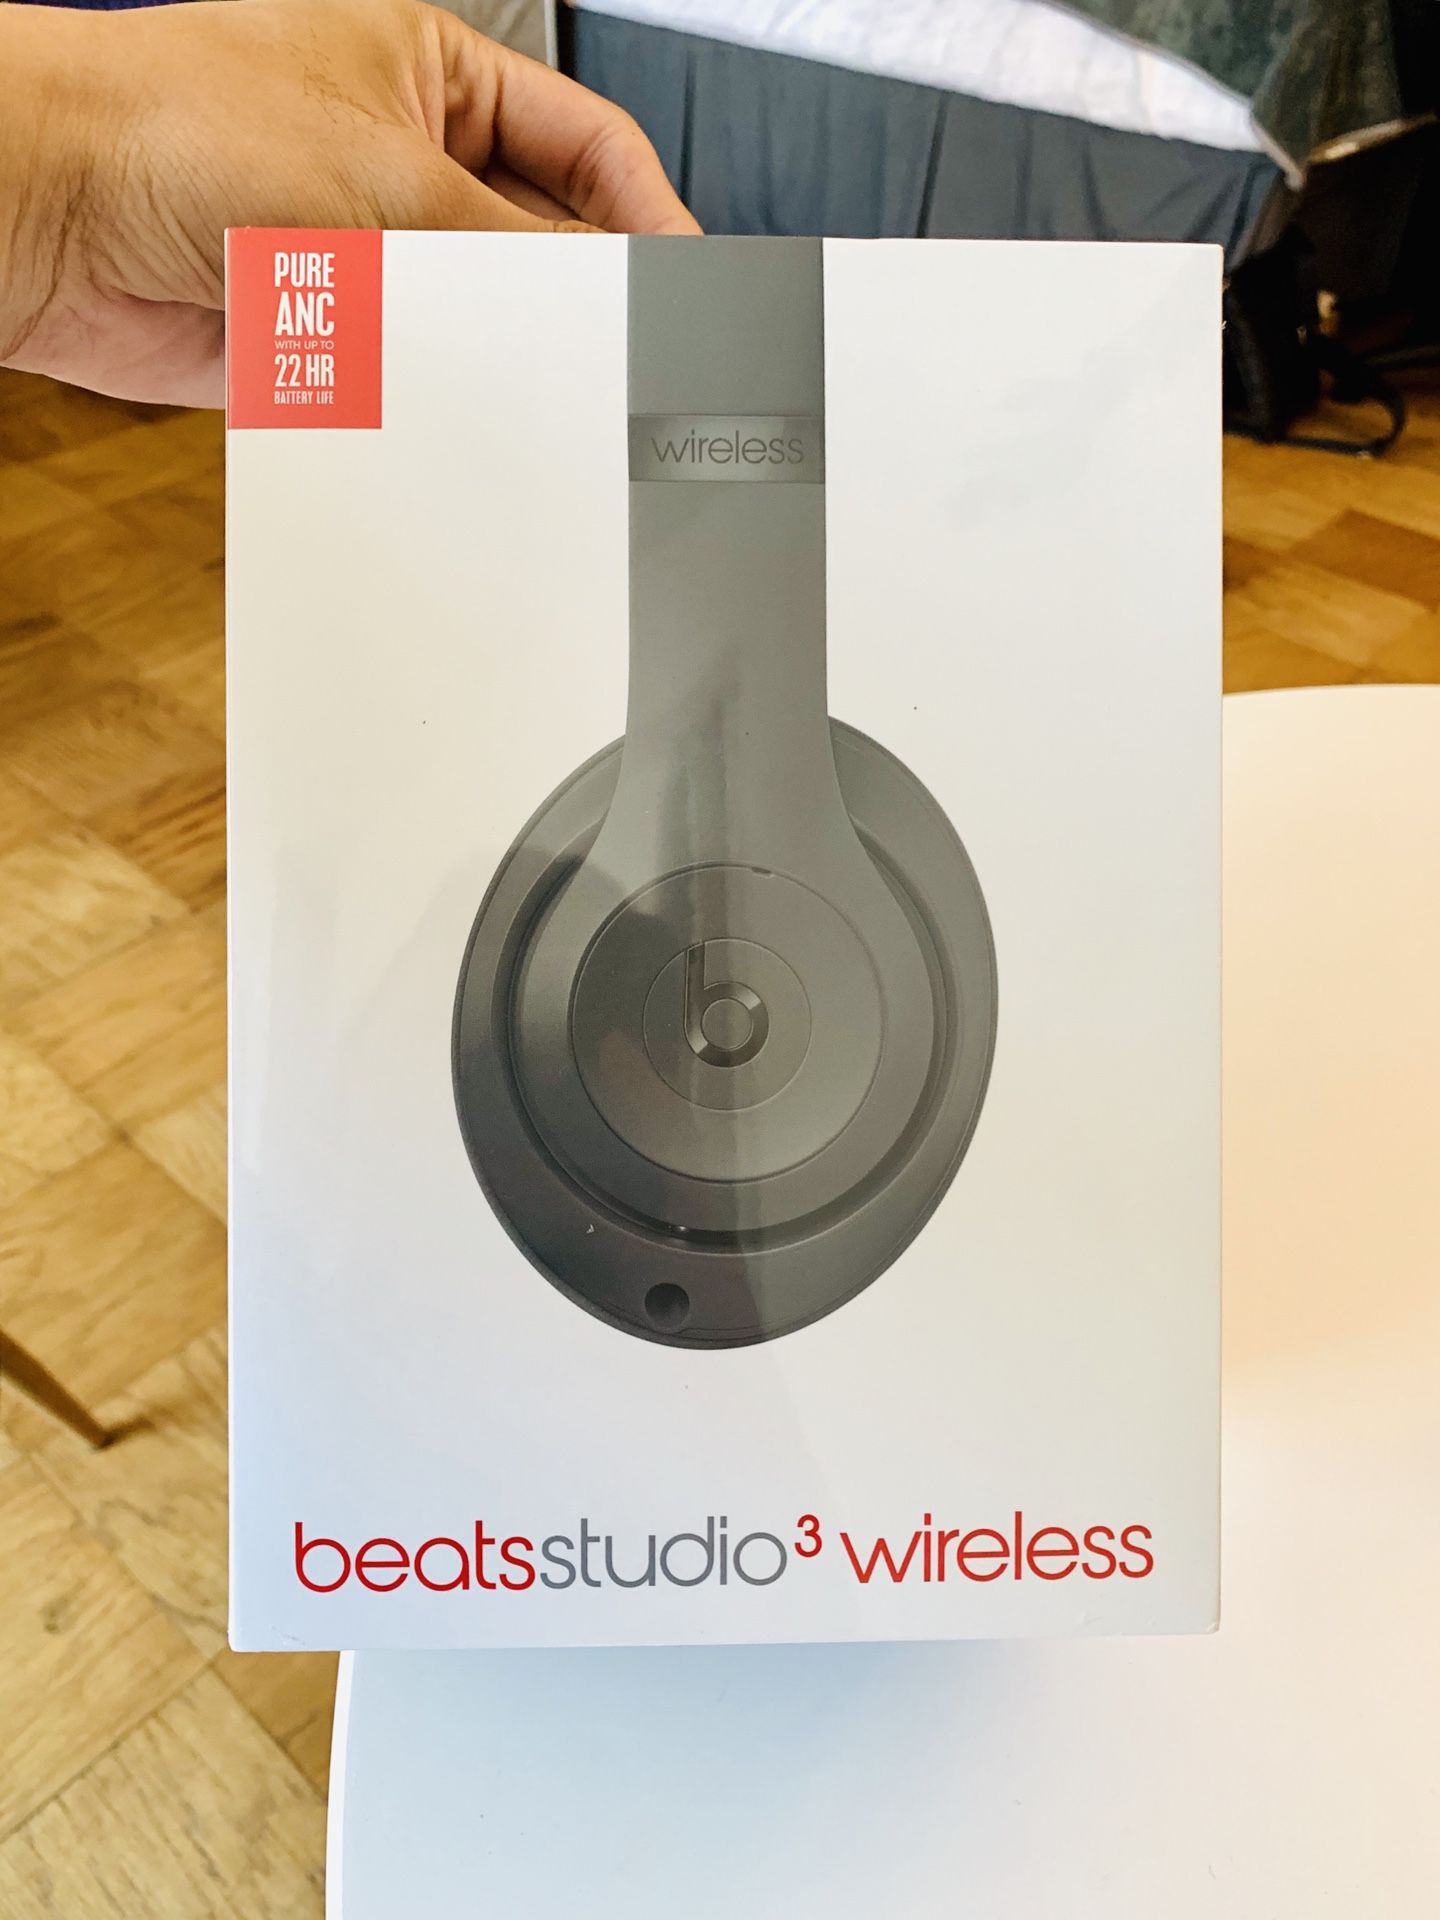 Brand new Beats Studio 3 wireless (Gray) latest color